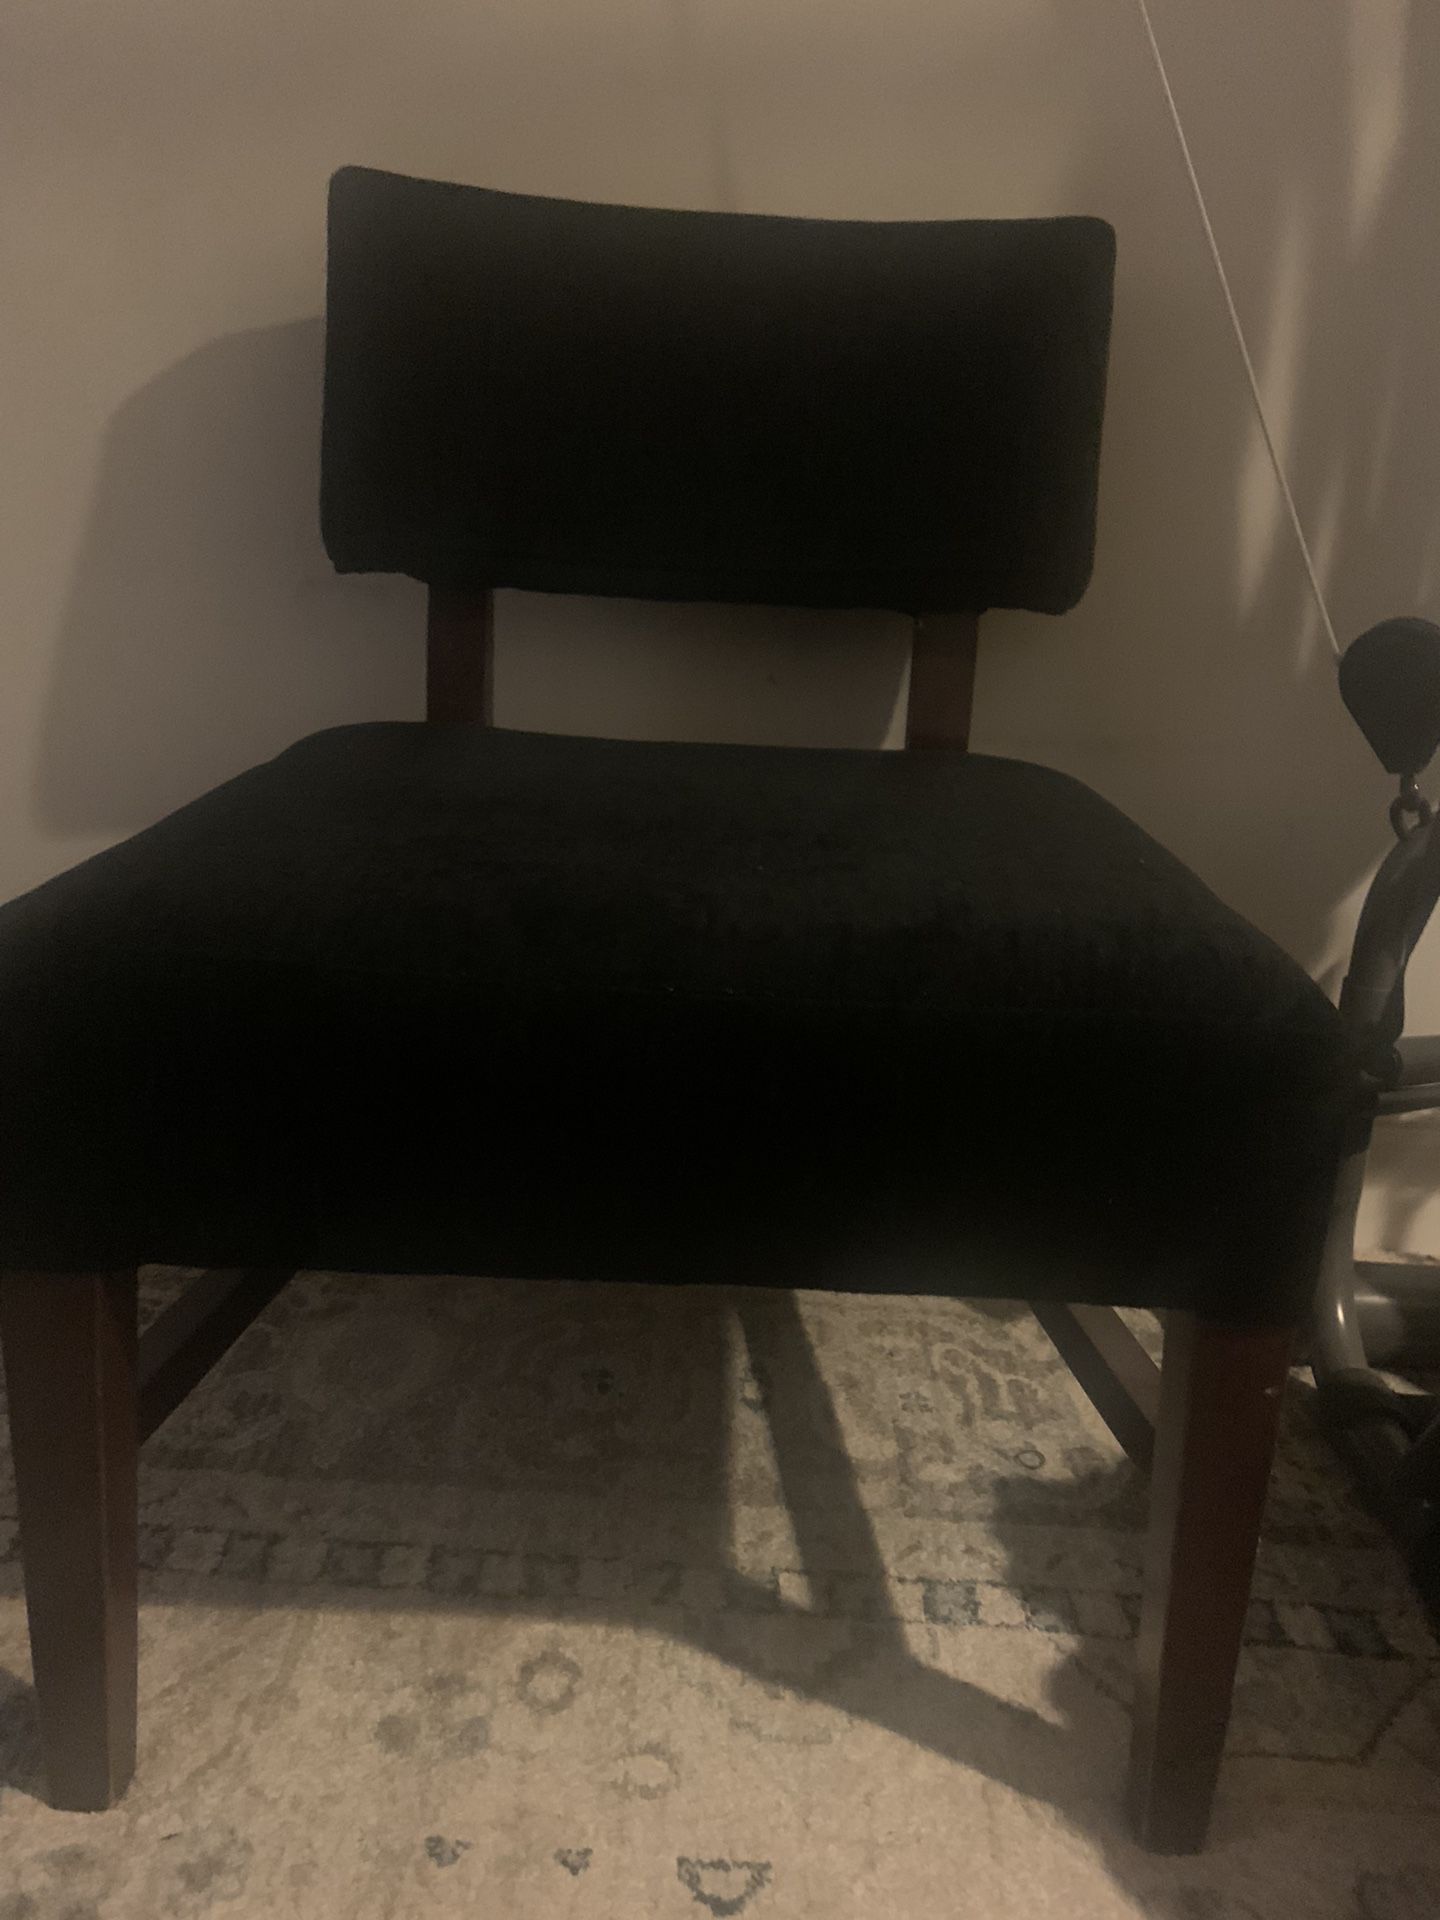 Free Black chairs